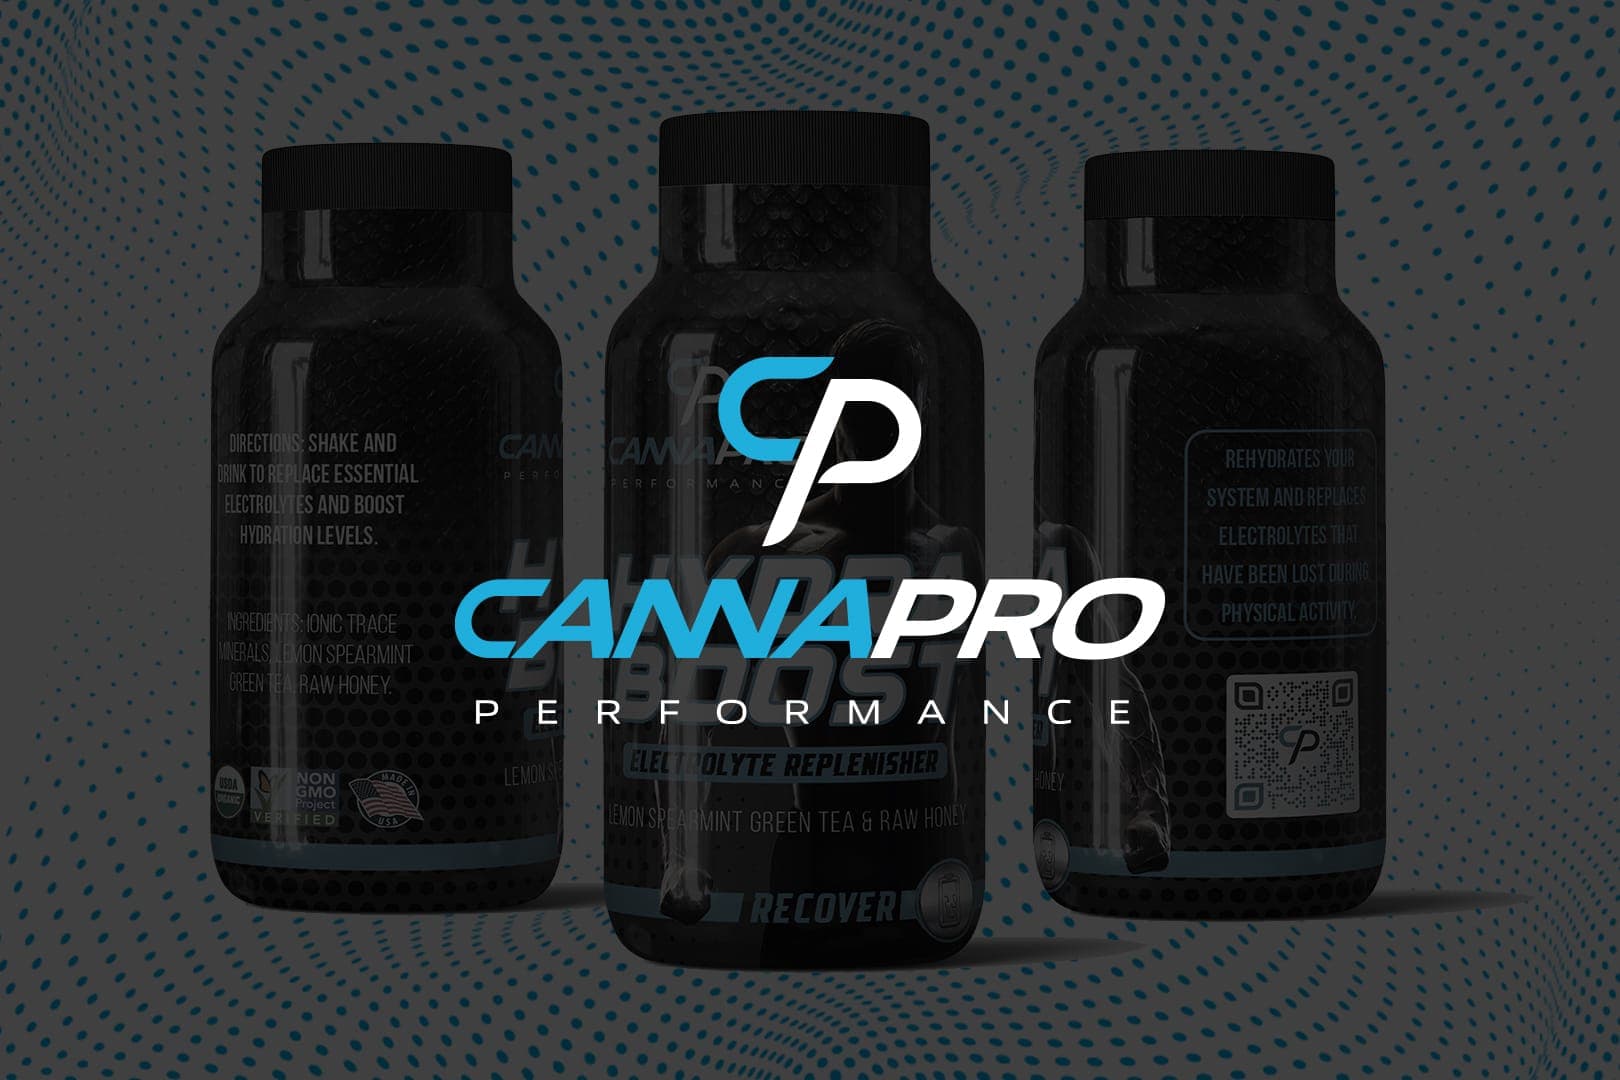 CannaPro Performance